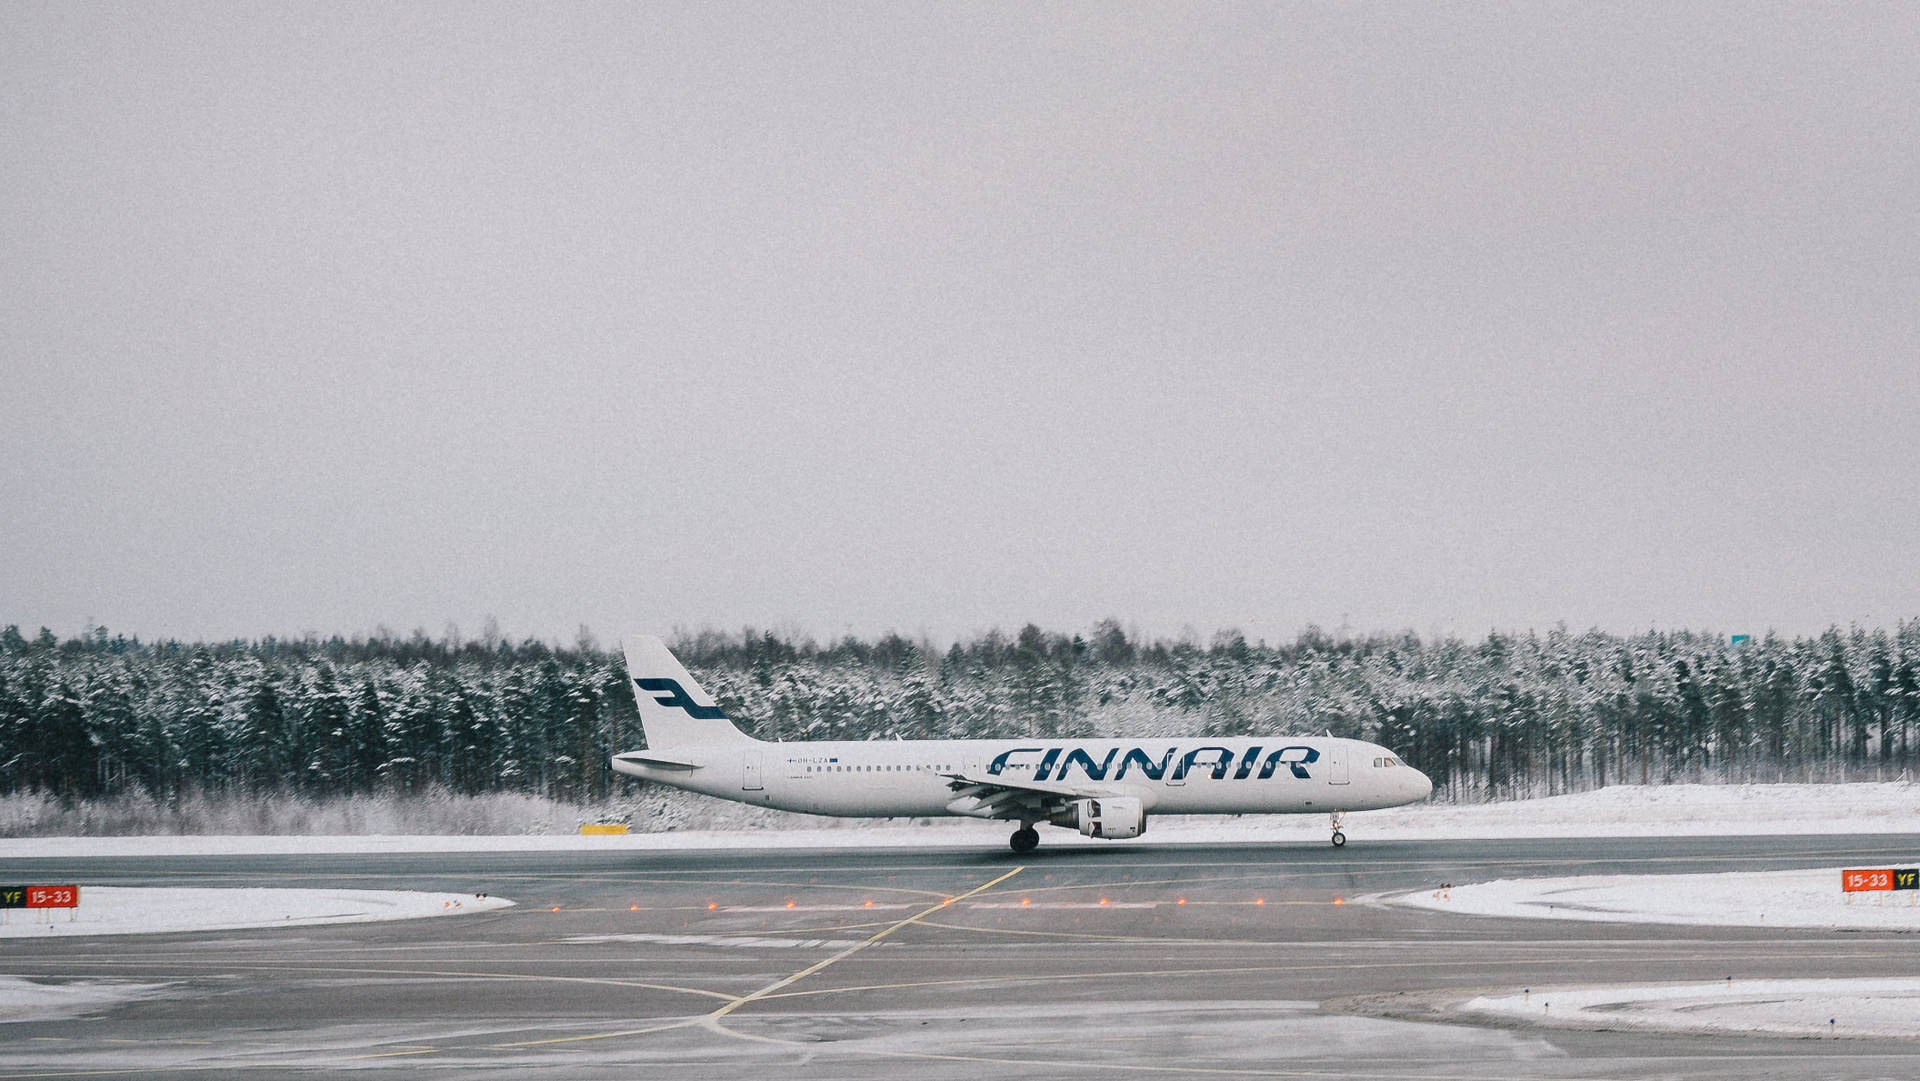 Caption: Finnair Aircraft Ready for Departure on Tarmac Wallpaper